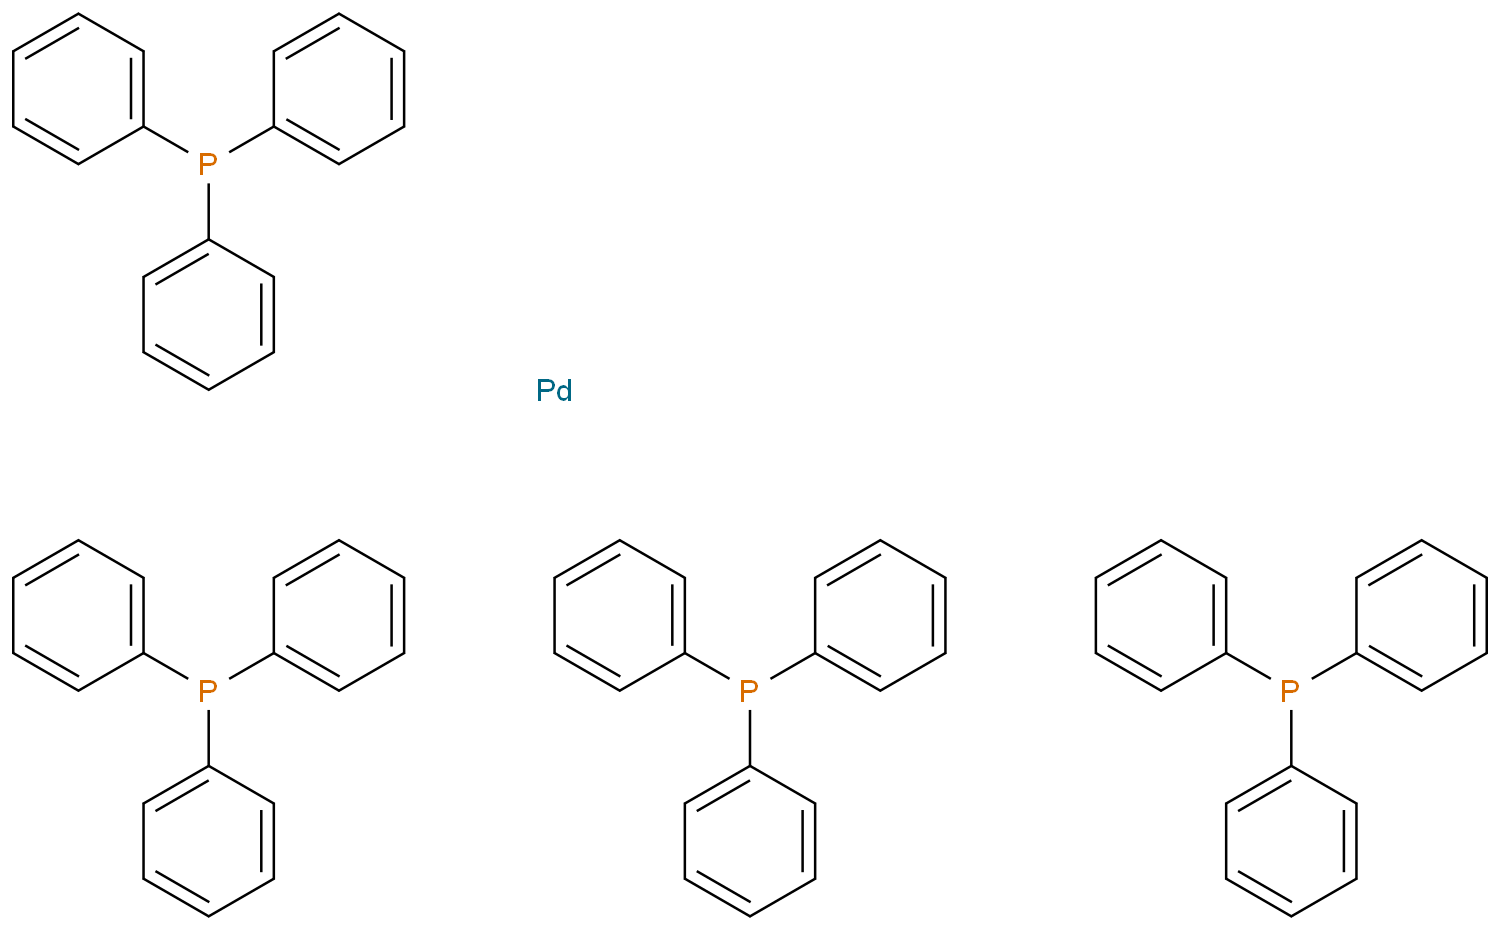 Tetrakis(triphenylphosphine)palladium